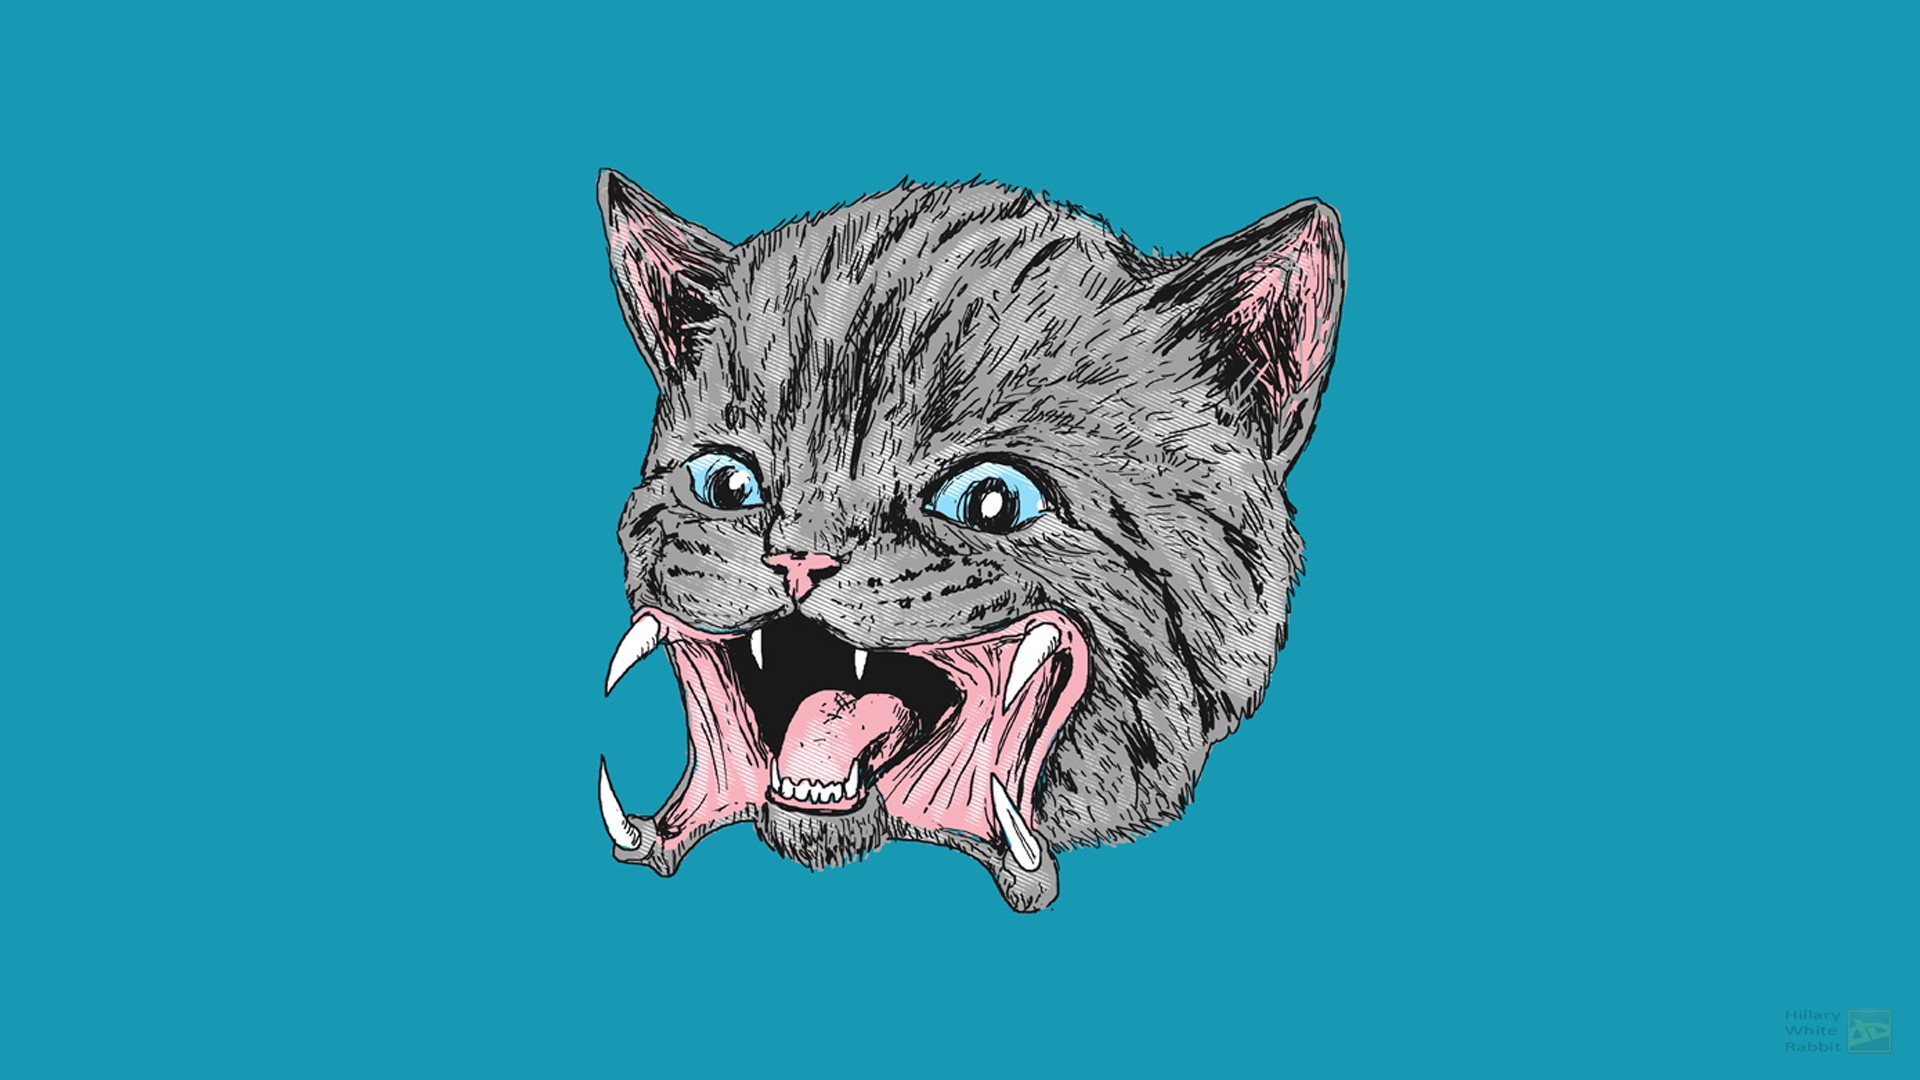 General 1920x1080 kittens science fiction creature DeviantArt blue background simple background horror predator (creature)